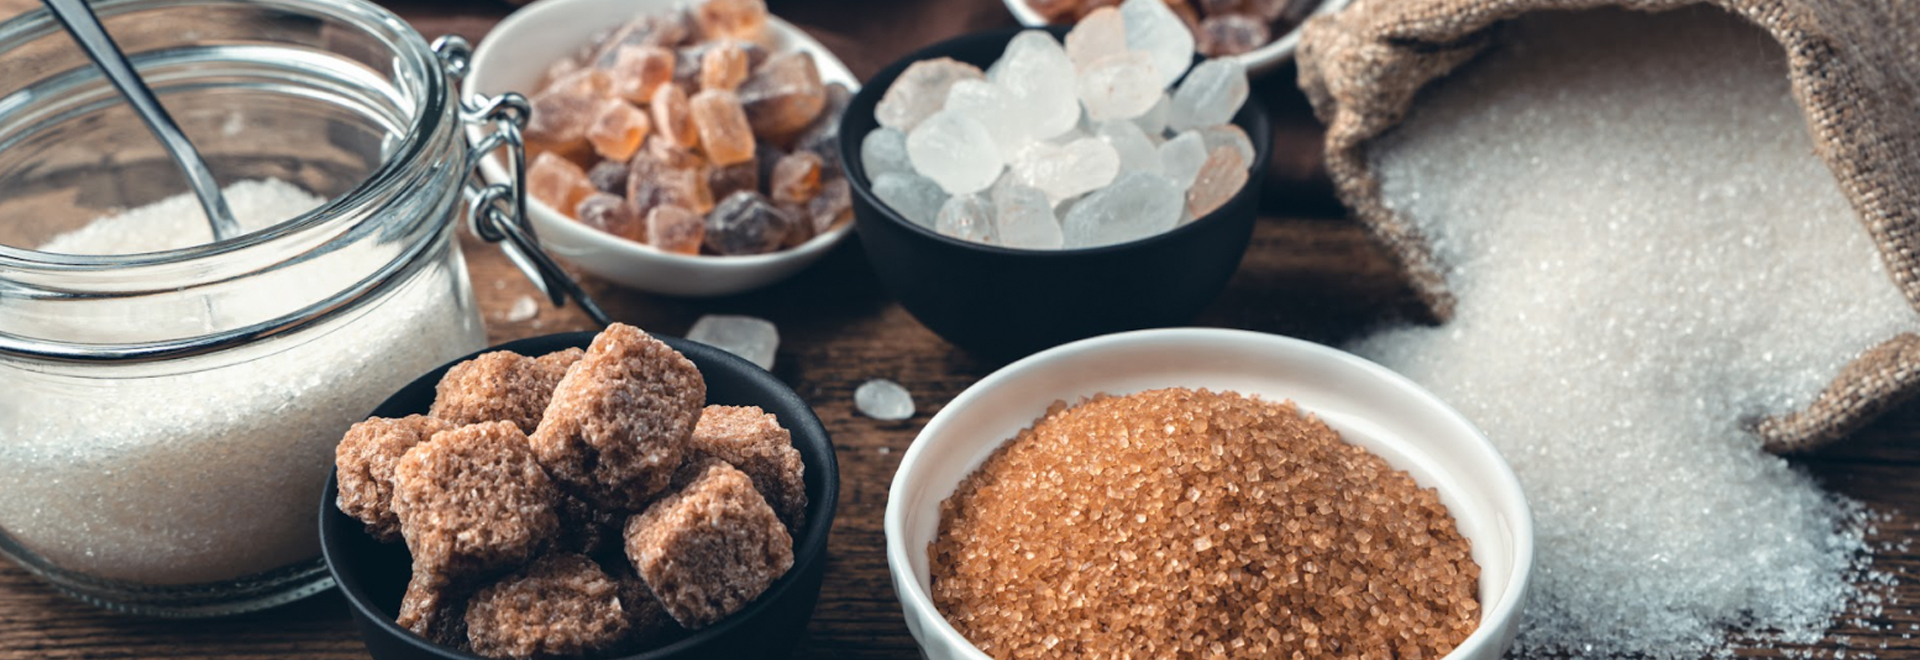 sugar-substitute-sugar-alcohol-sweetener-for-diabetes-patients